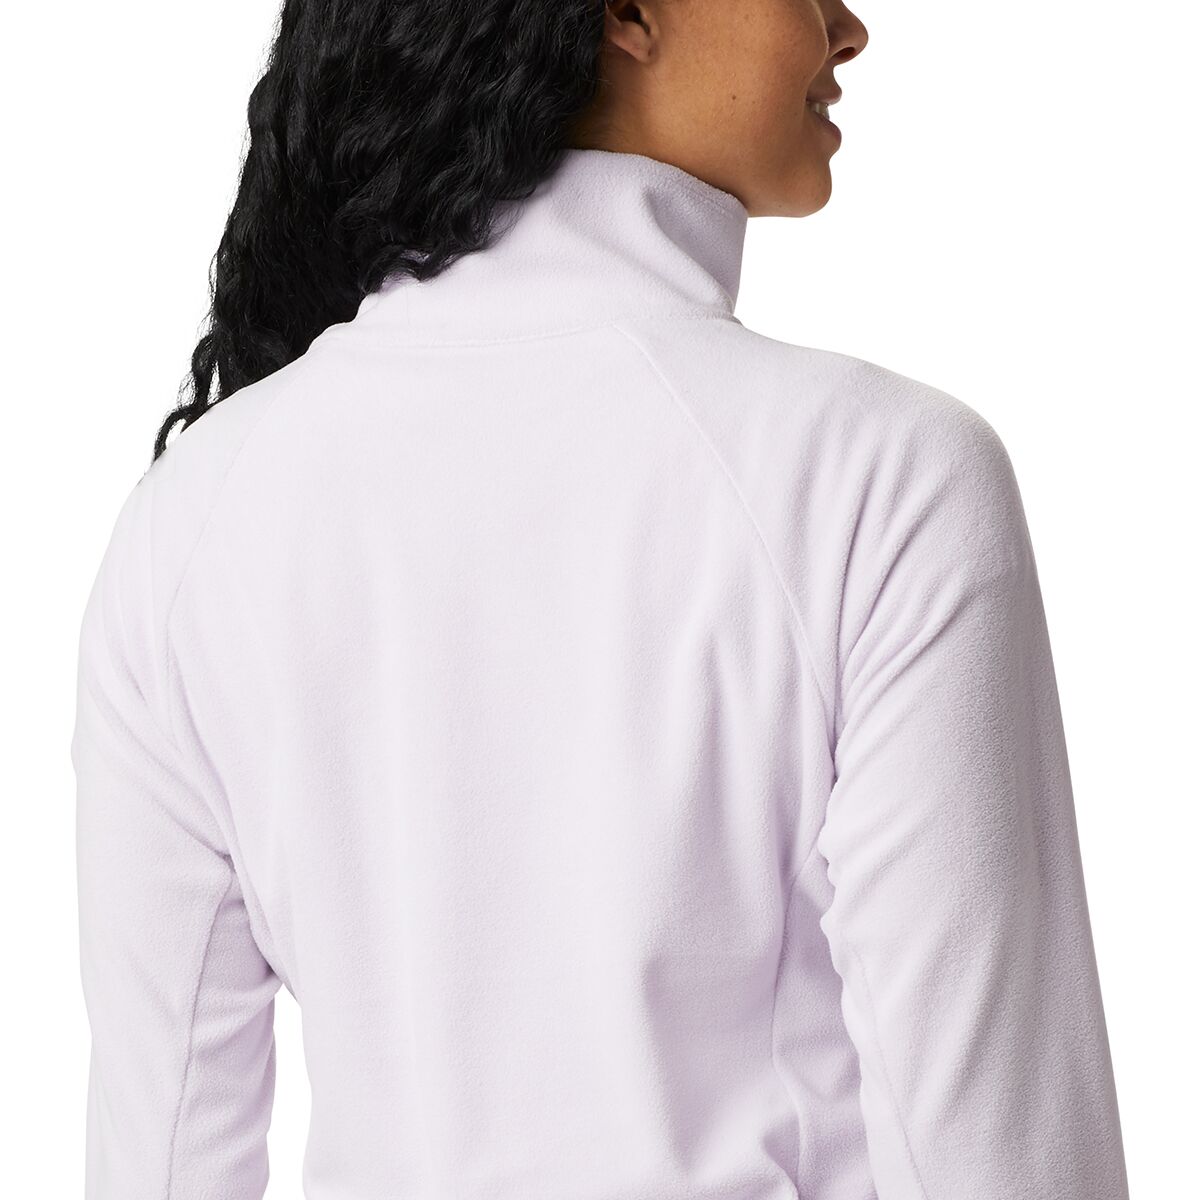 Columbia Women's Glacial IV Half Zip Fleece, Soft Fleece with Classic Fit,  Blossom Pink, 3X Plus